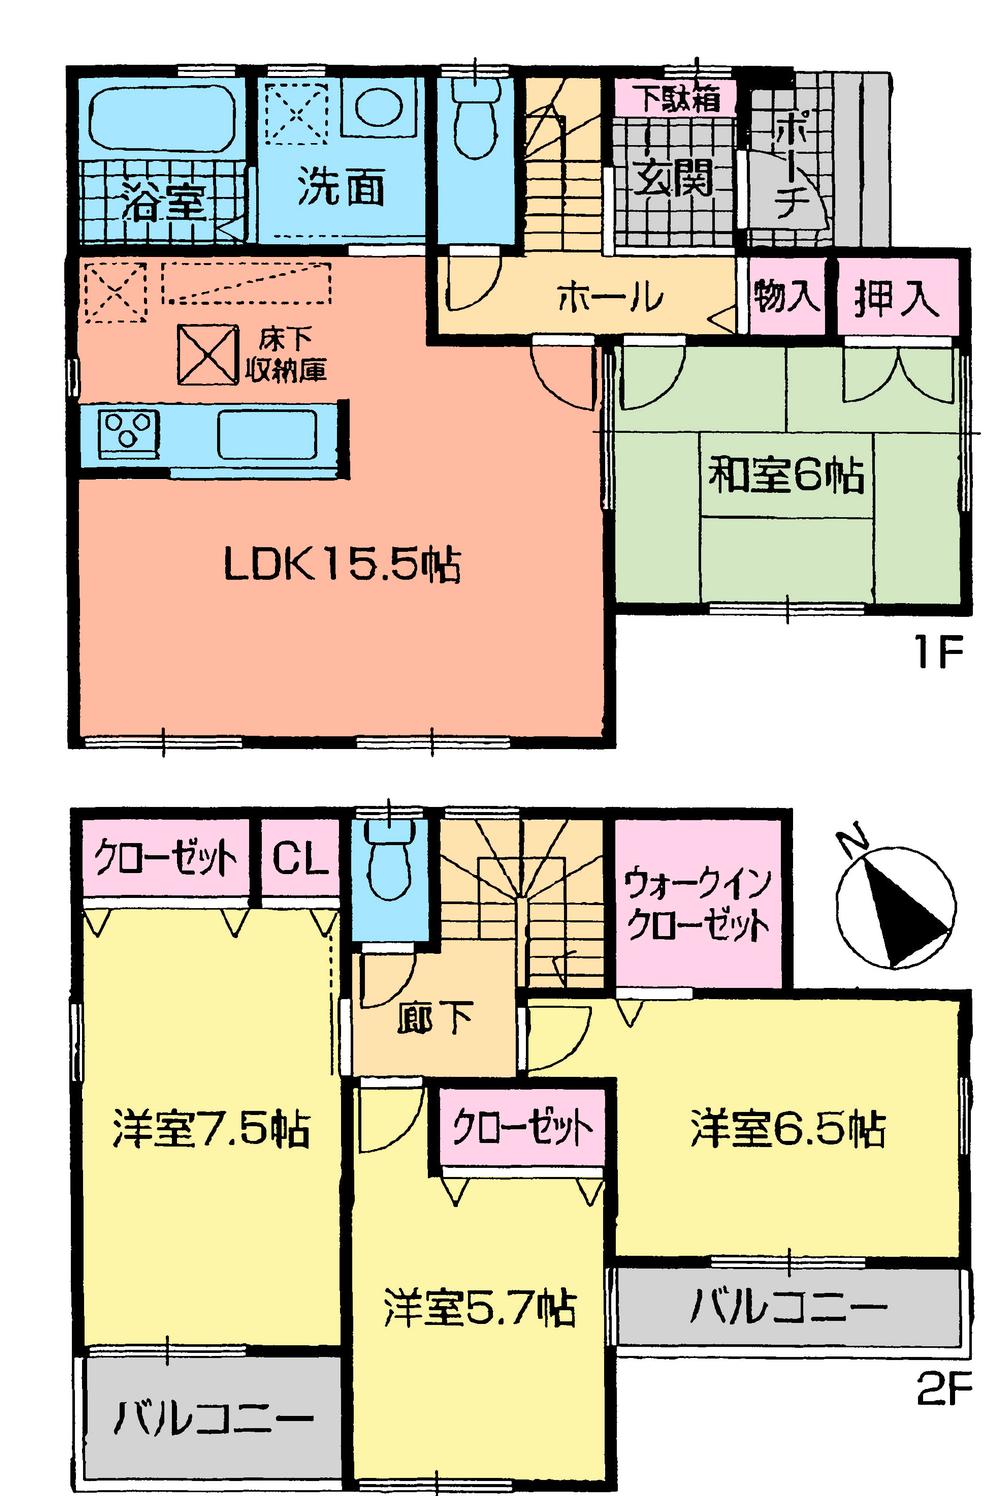 Floor plan. 29,800,000 yen, 4LDK, Land area 136.55 sq m , Building area 97.61 sq m